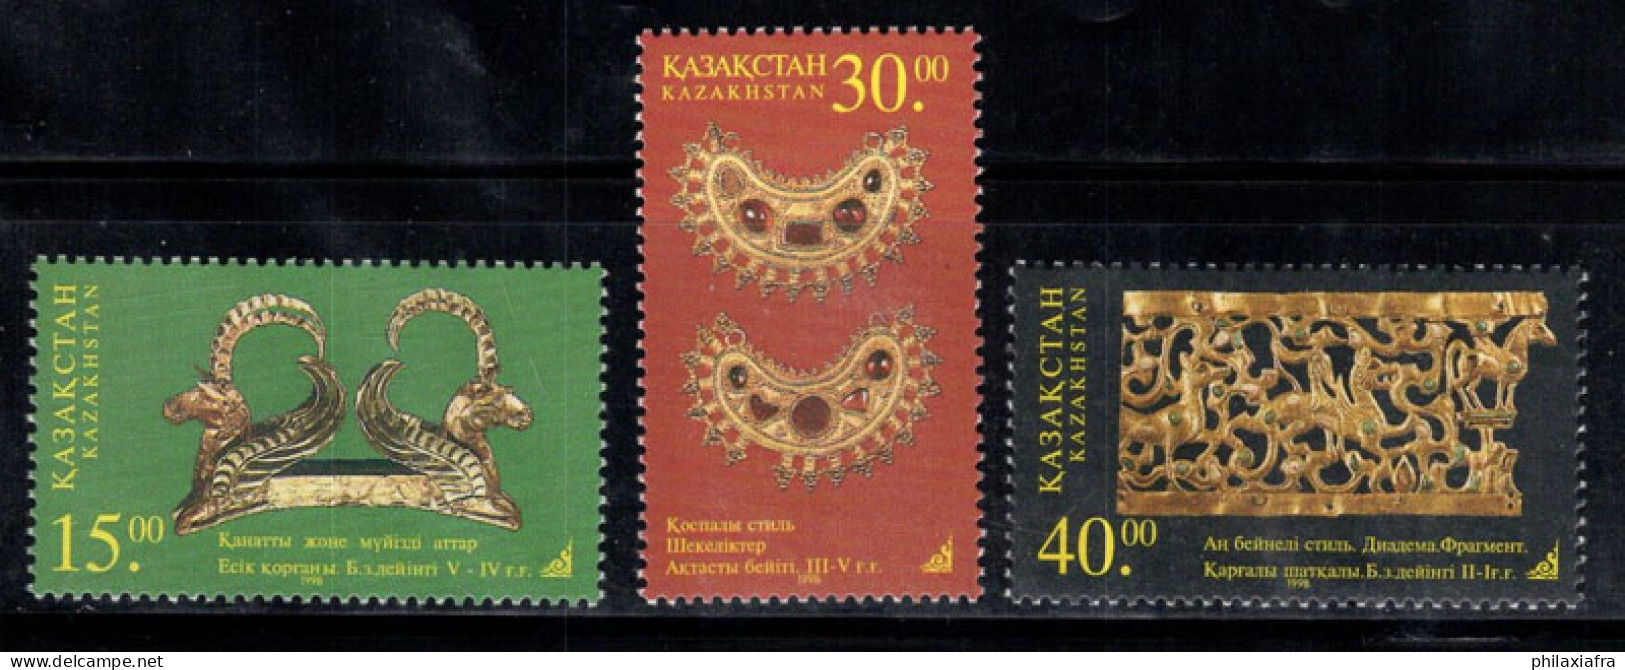 Kazakhstan 1998 Mi. 210-212 Neuf ** 100% Art, Or - Kazachstan